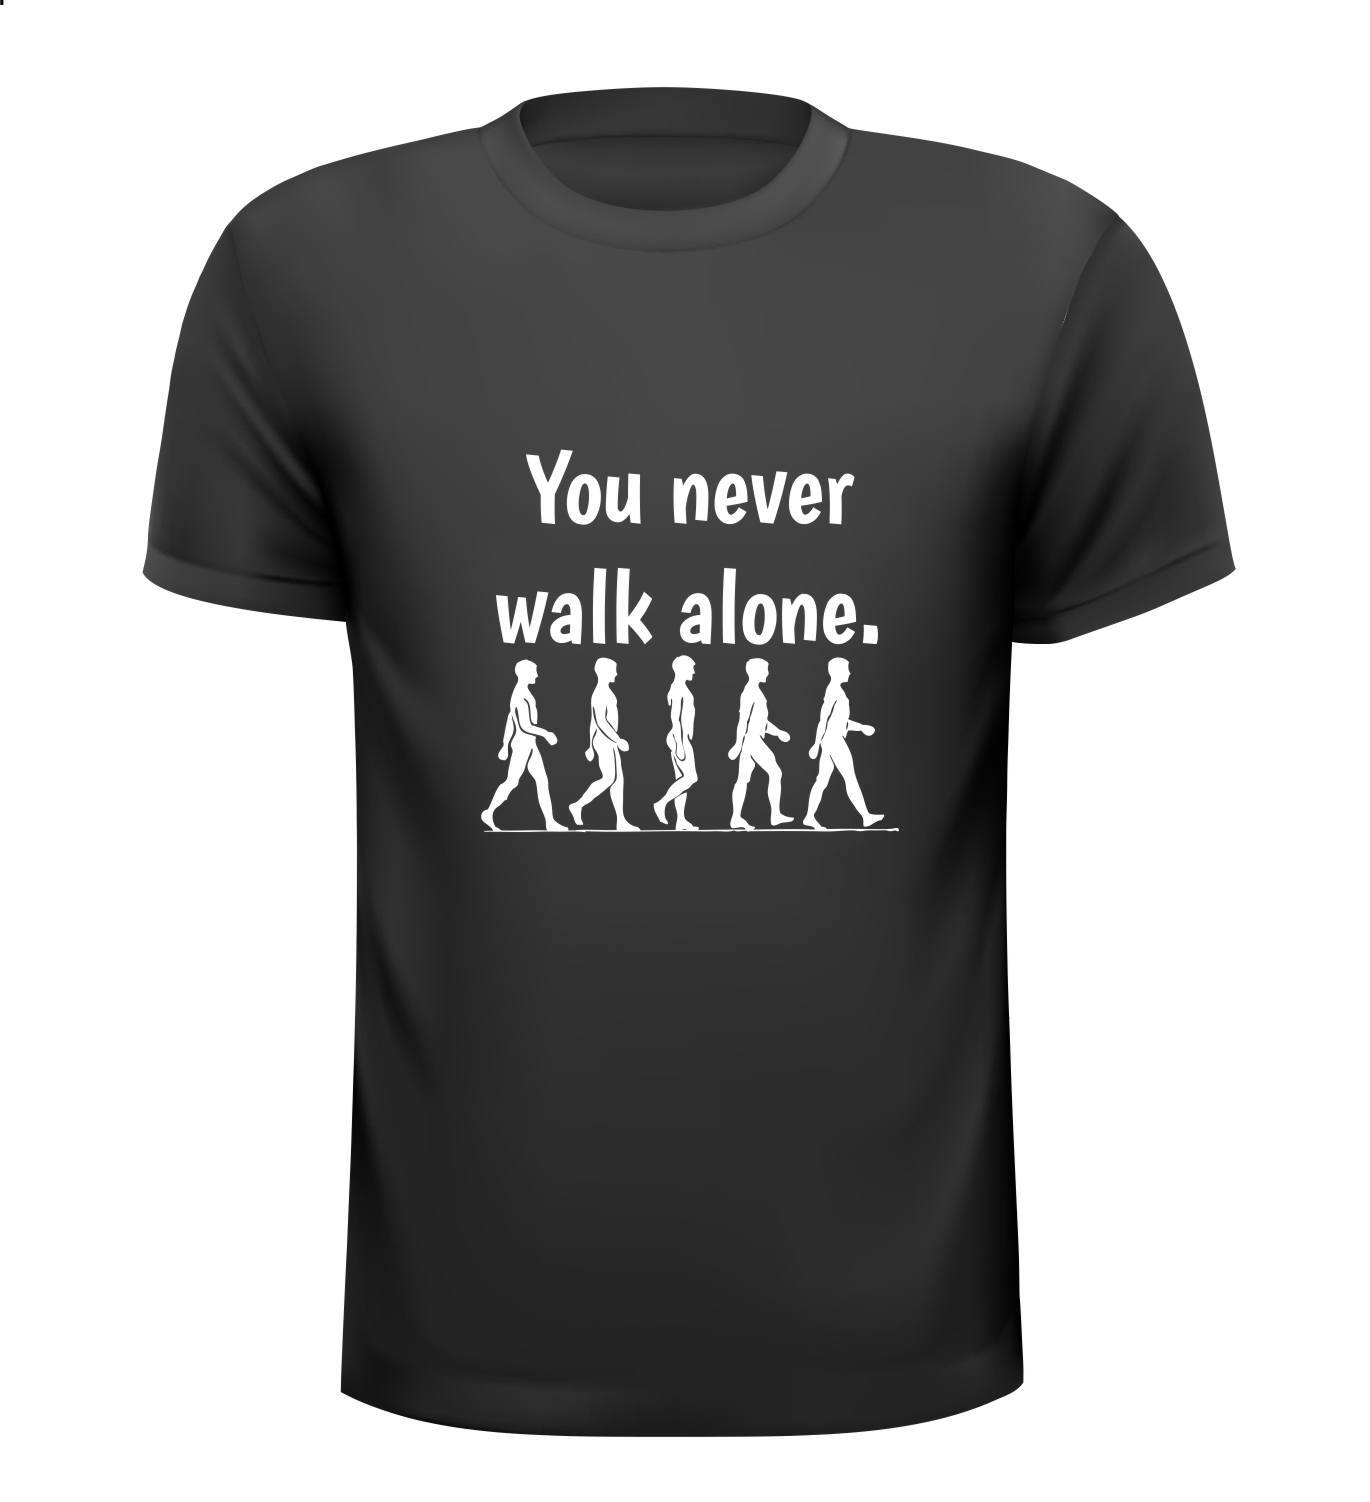 T-shirt you never walk alone Leuk voor een wandelvierdaagse of avondvierdaagse shirtje